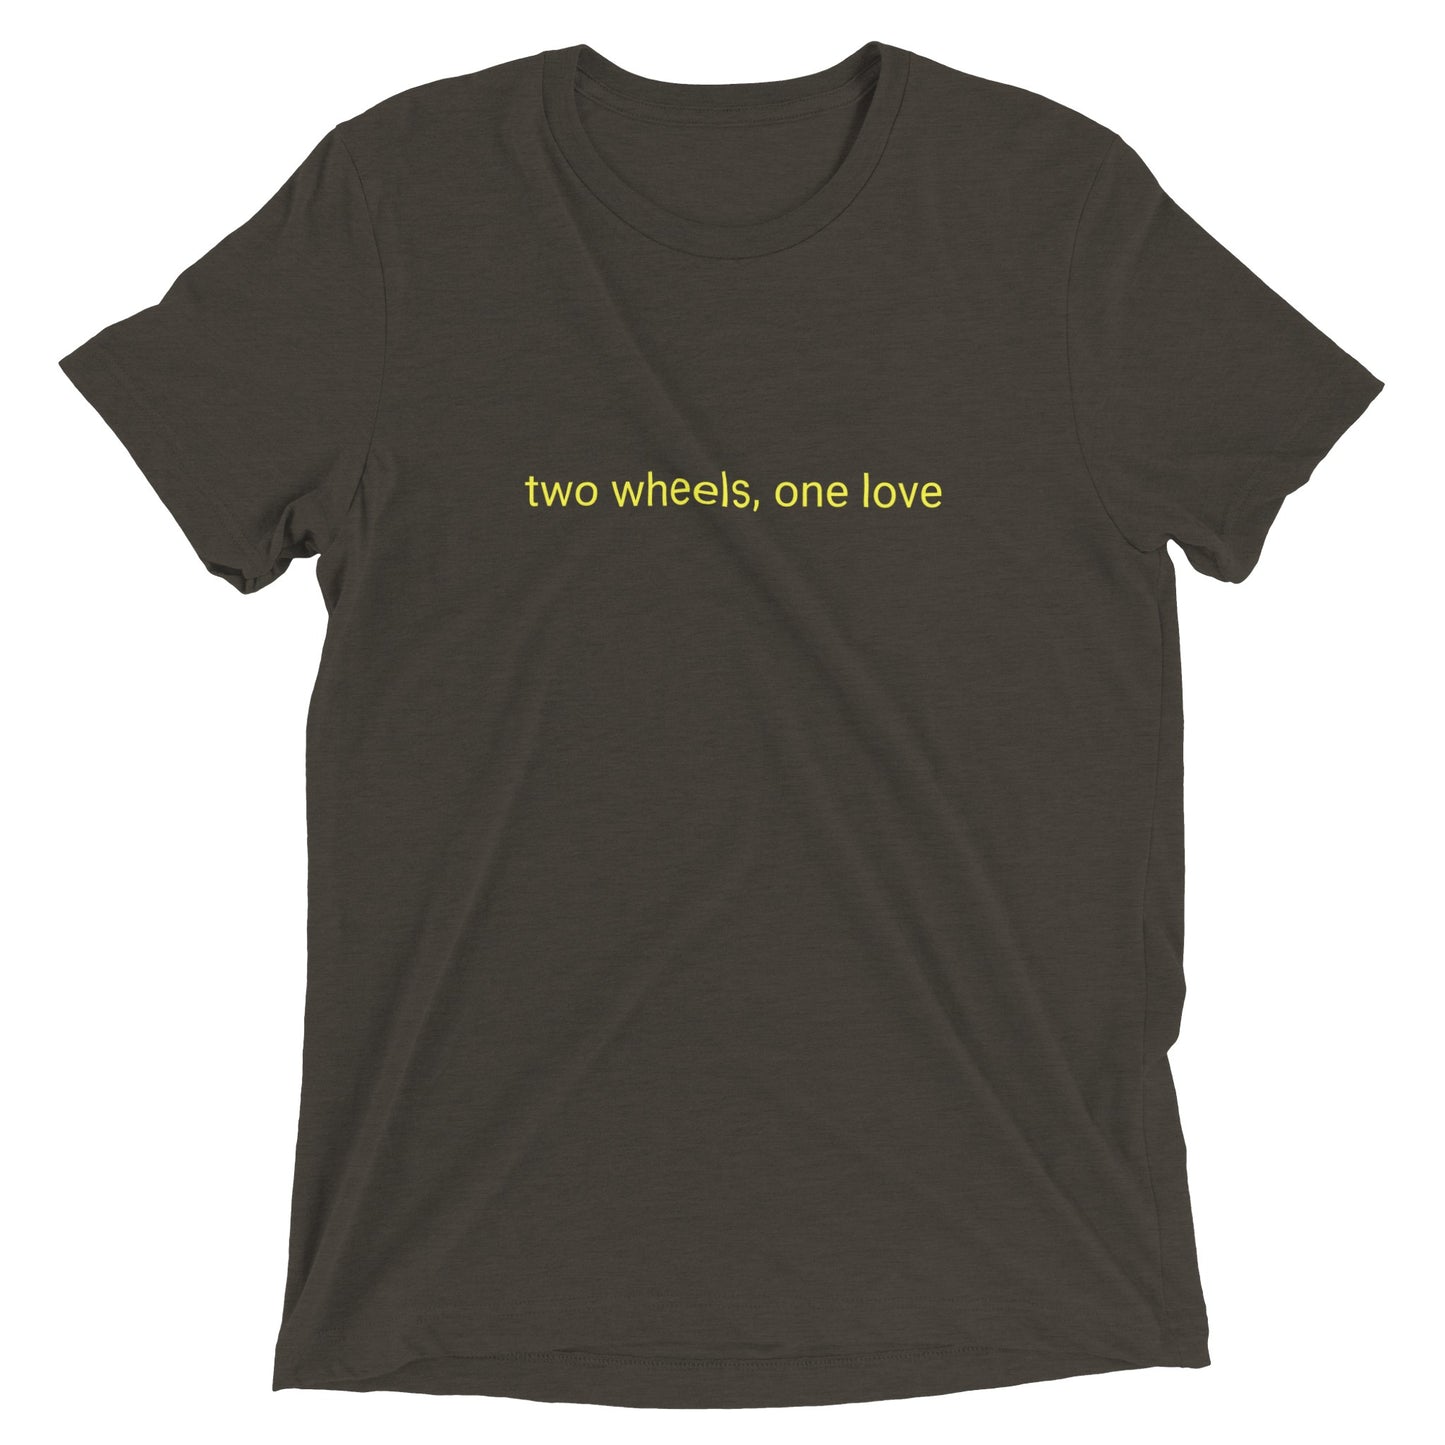 Two wheels, one love - Triblend Unisex Crewneck T-shirt